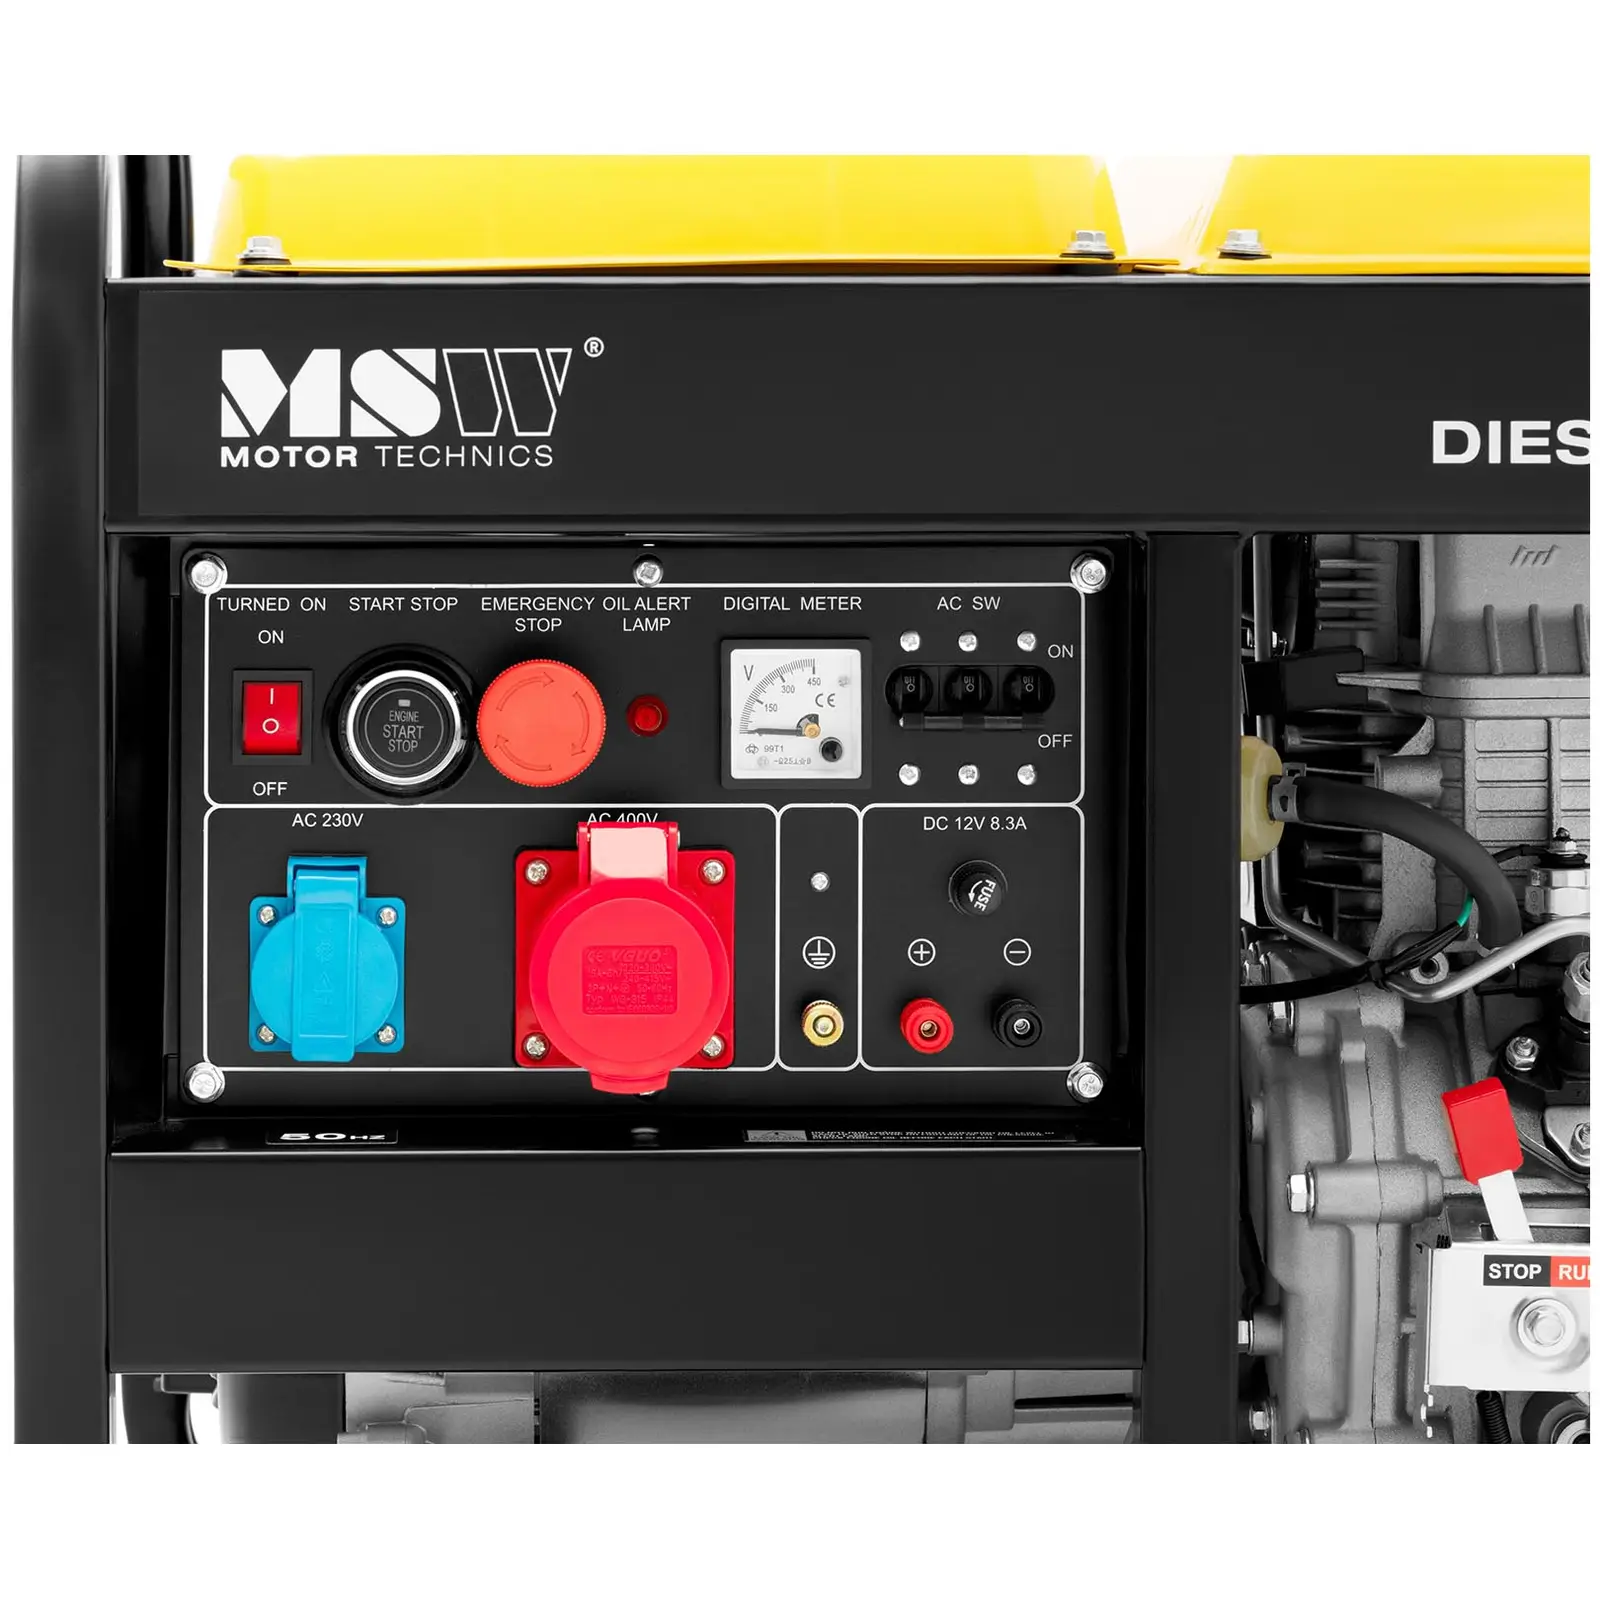 Agregat prądotwórczy Diesel - 1830 / 5500 W - 12,5 l - 240/400 V - mobilny - AVR - Euro 5